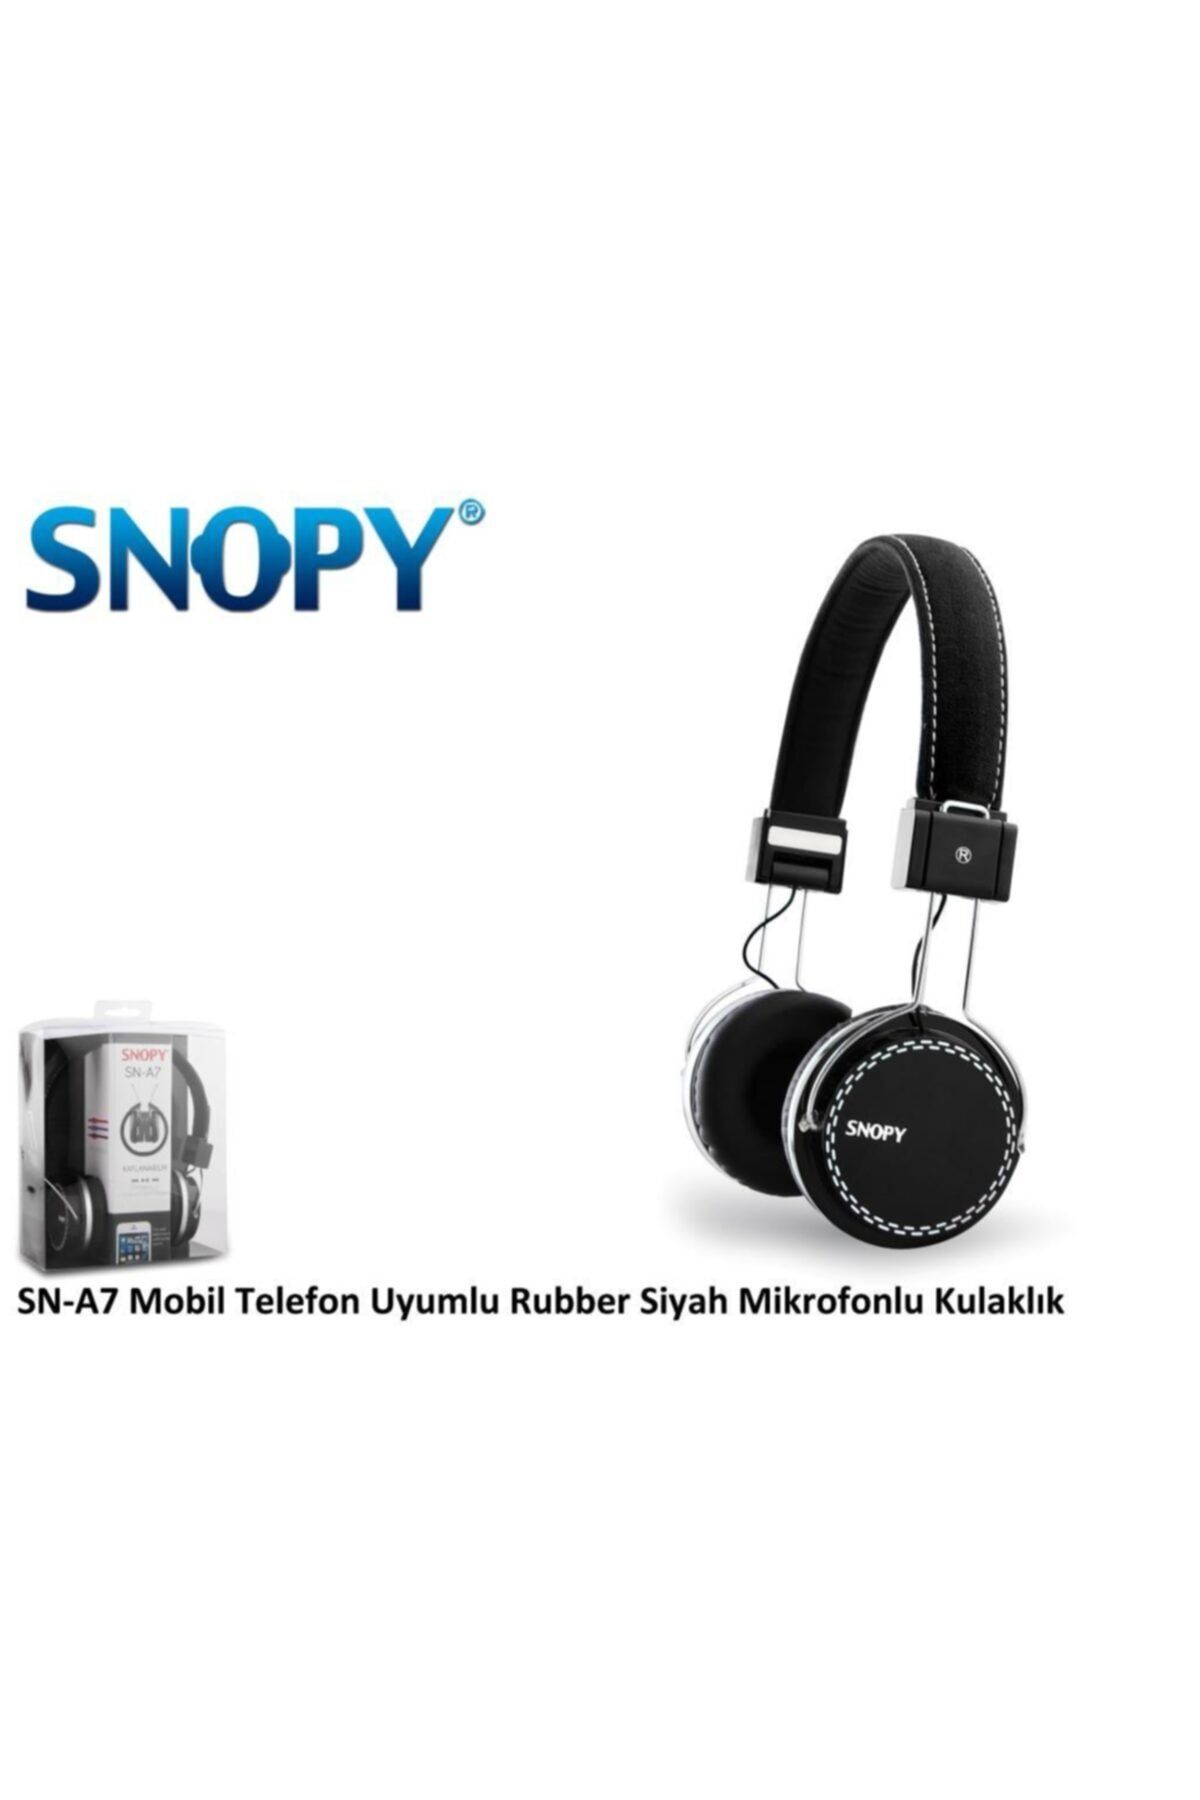 SNOOPY Snopy Mobil Telefon Uyumlu Rubber Siyah Mikrofonlu Kulaklık Sn-a7